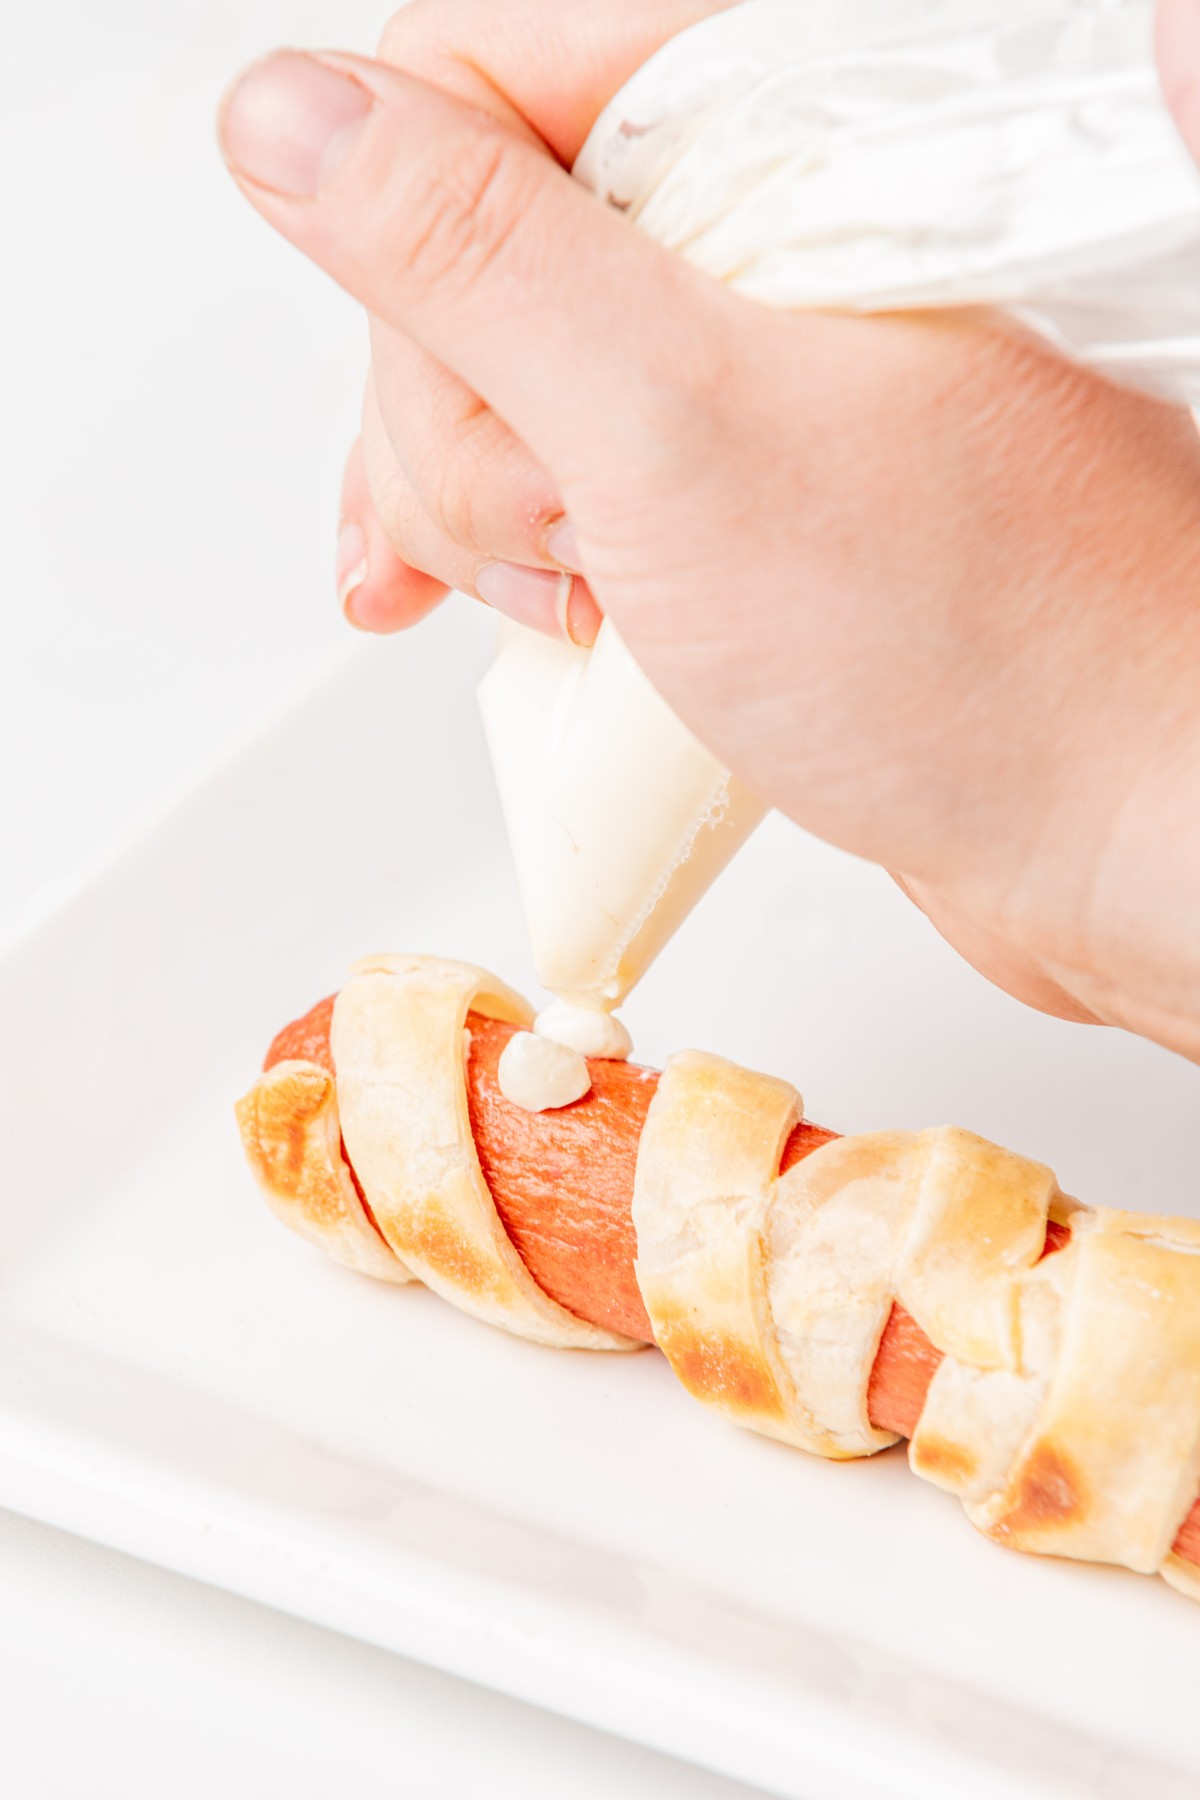 piping cream cheese eyes onto hot dog. 